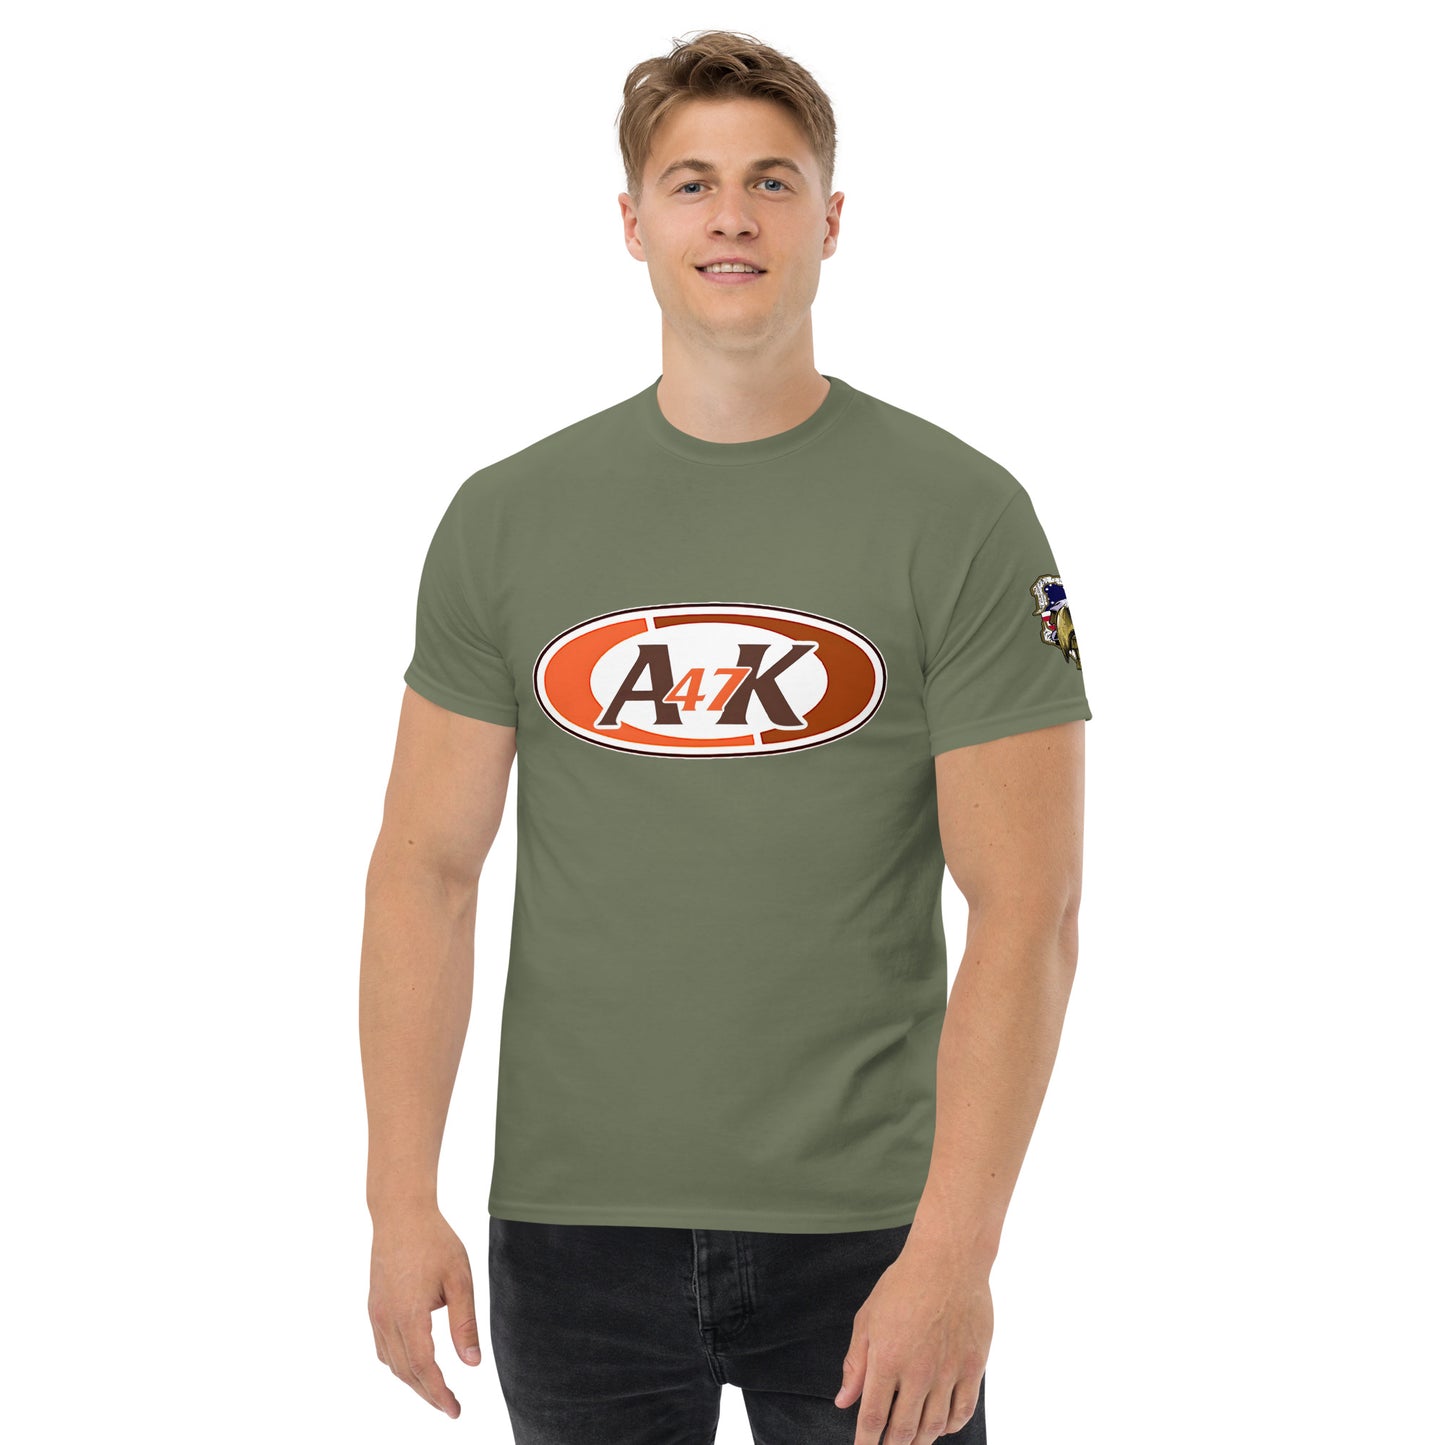 A&K 47 America’s Rifle